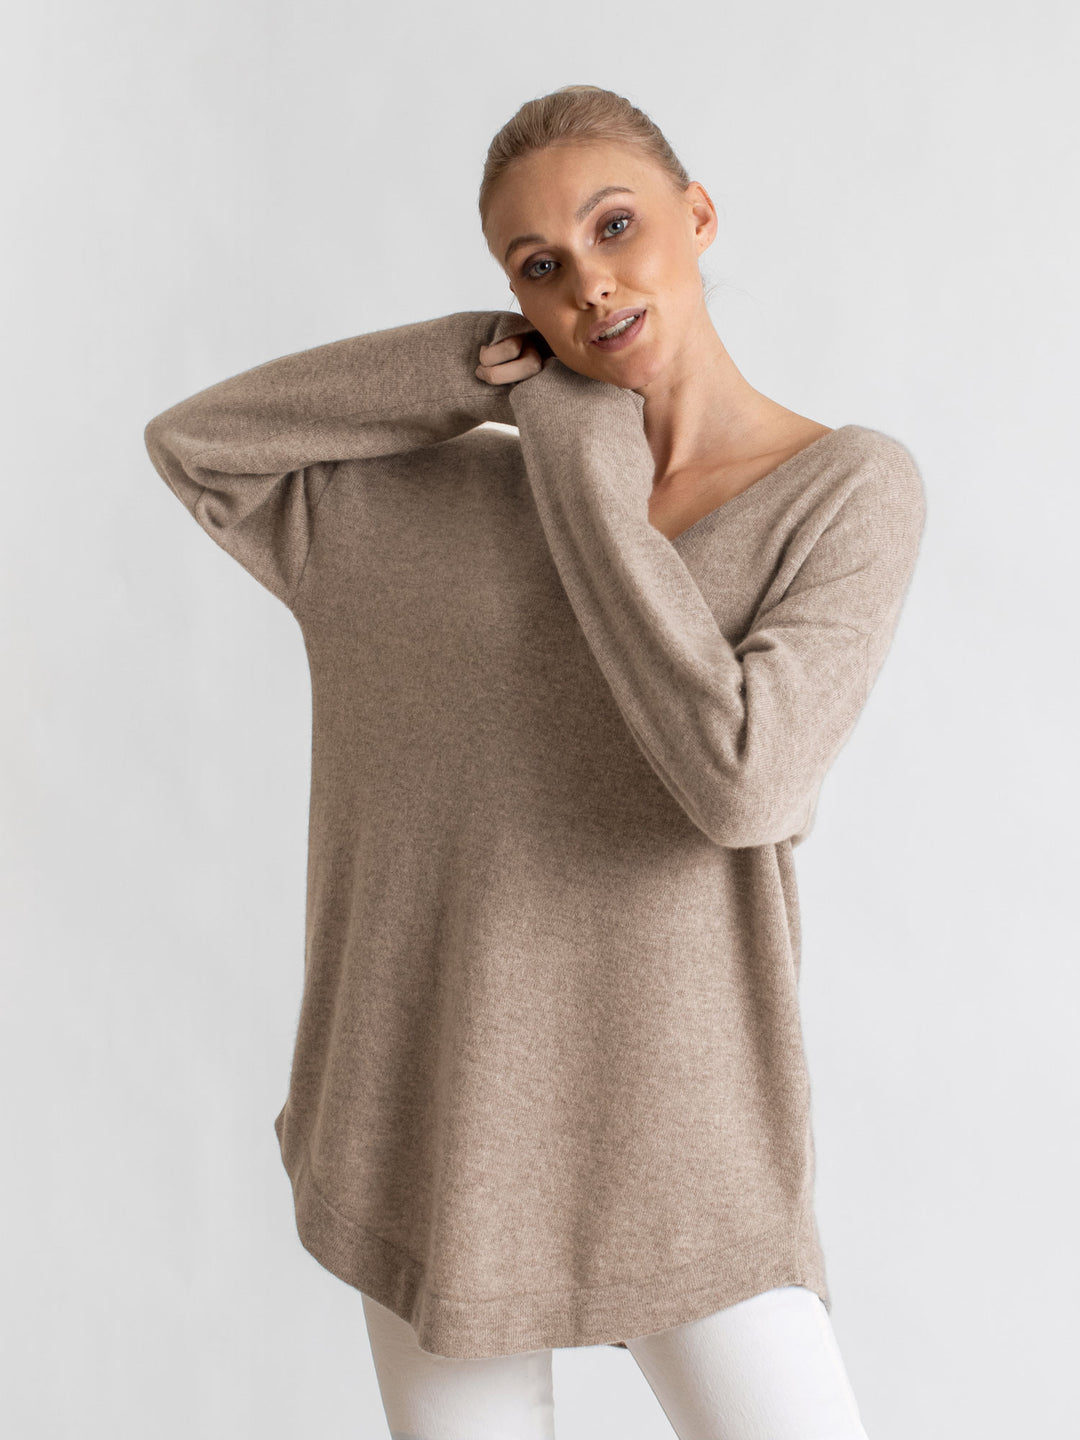 Cashmere sweater "Alva" V-neck sweater in 100% cashmere from norwegian Kashmina